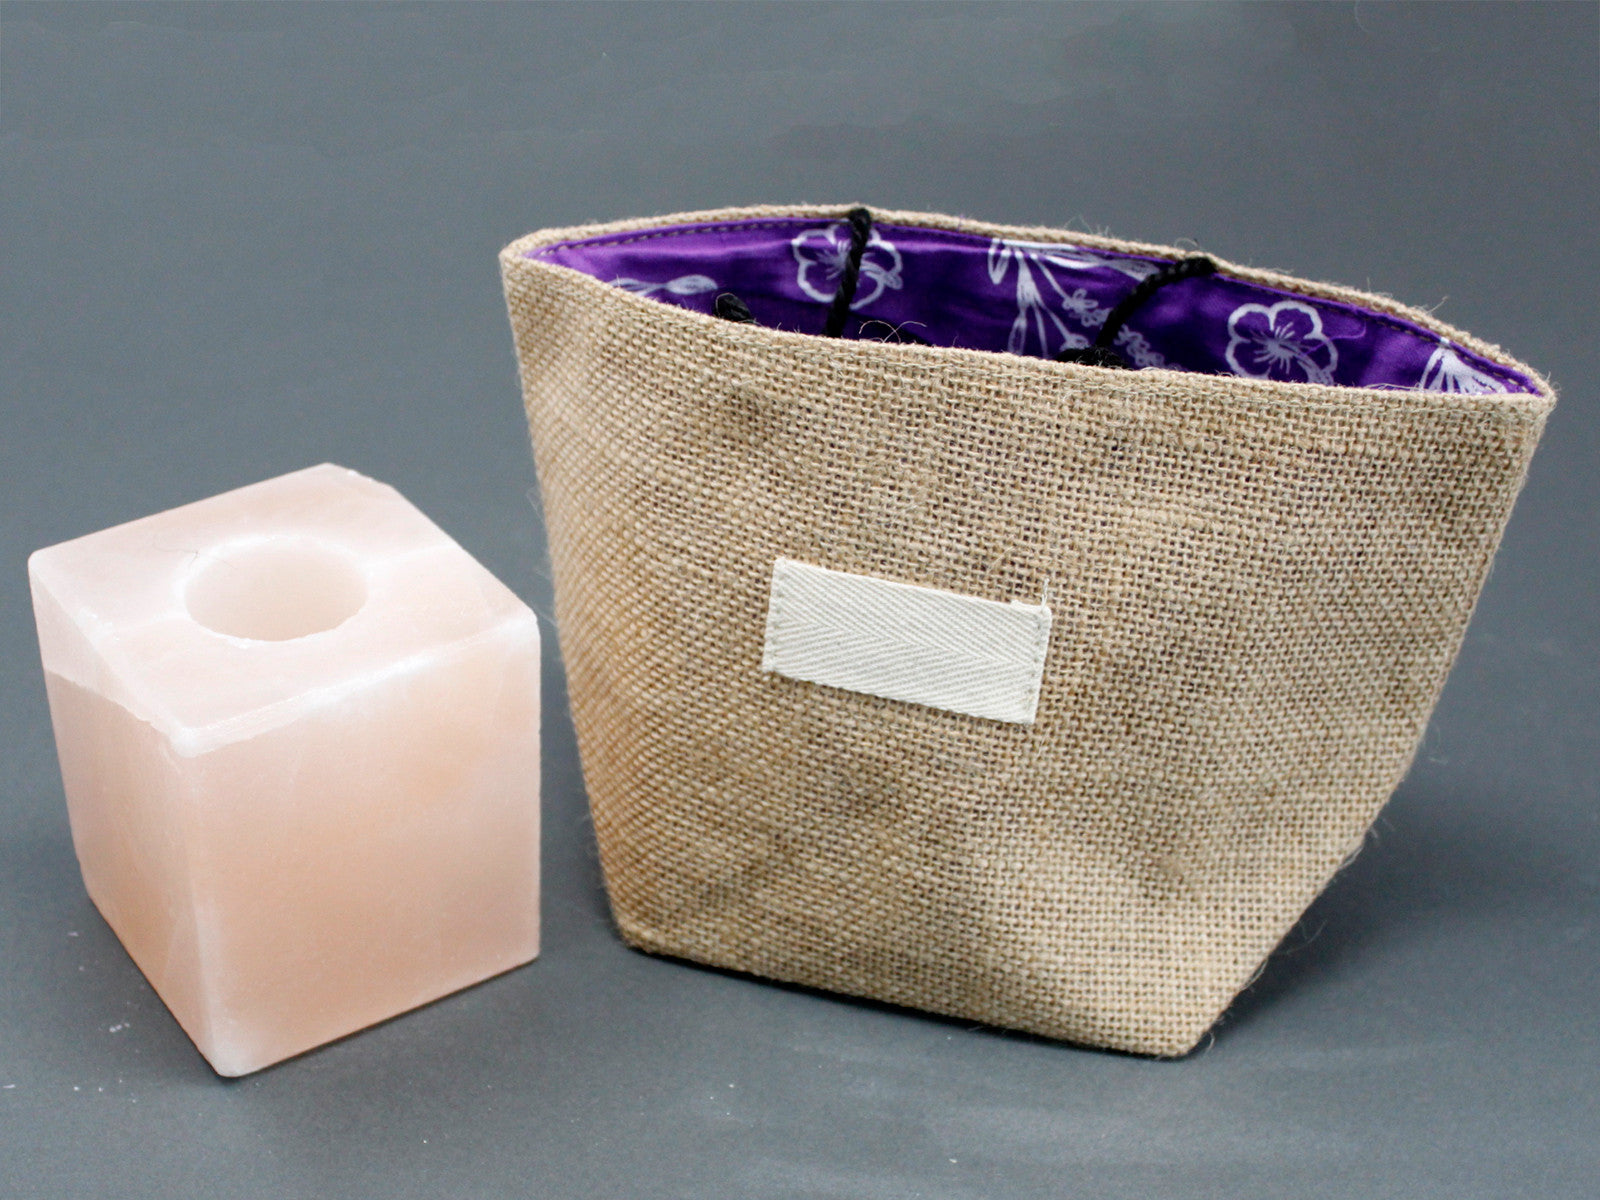 View Natural Jute Cotton Gift Bag Lavender Lining Large information